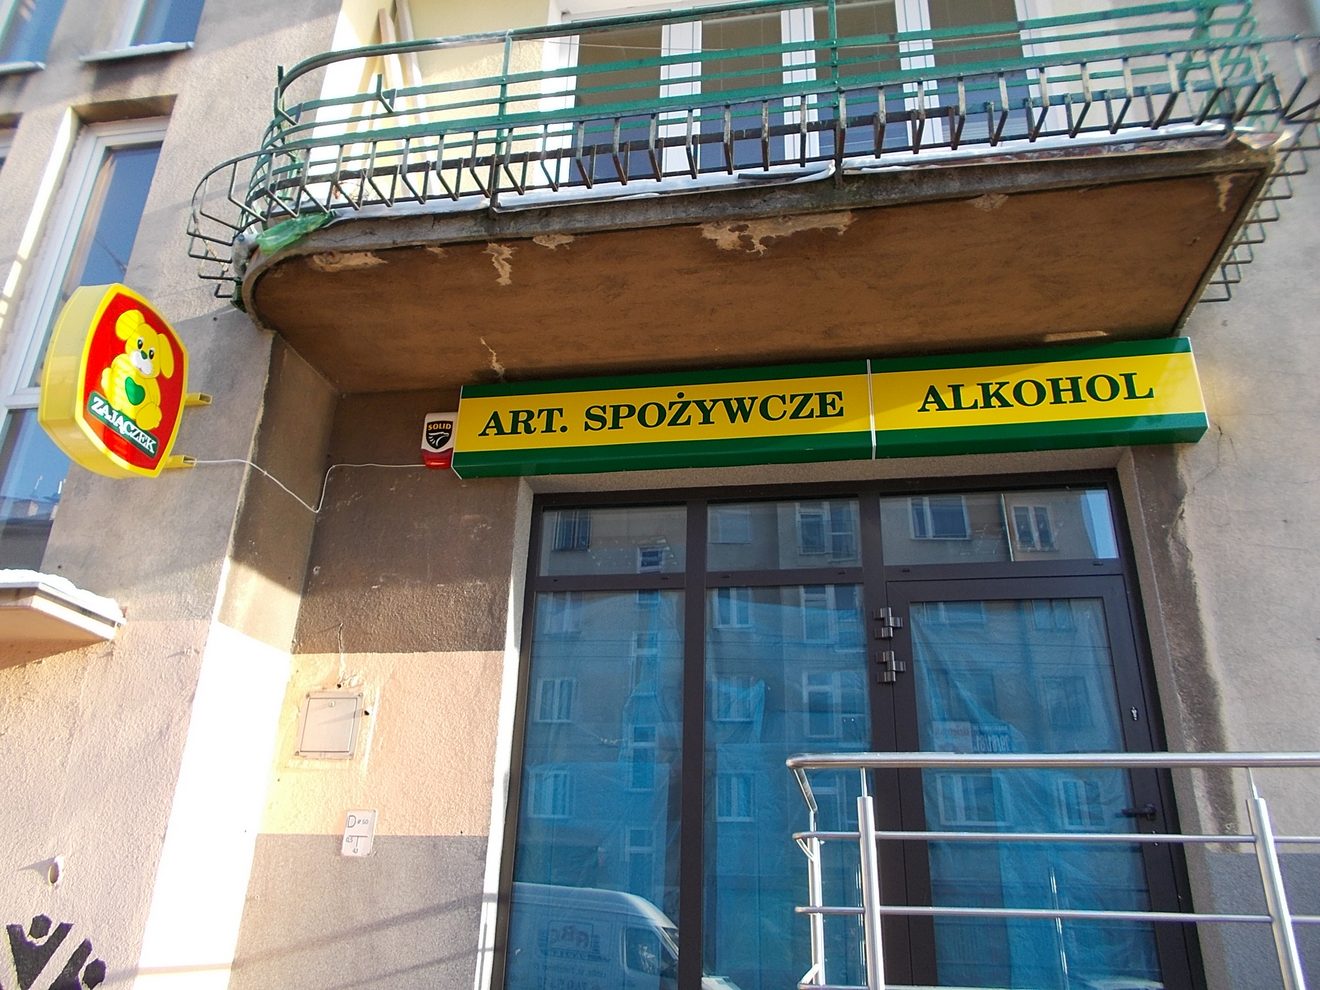 light panel and semaphore - ZAJĄCZEK grocery shop